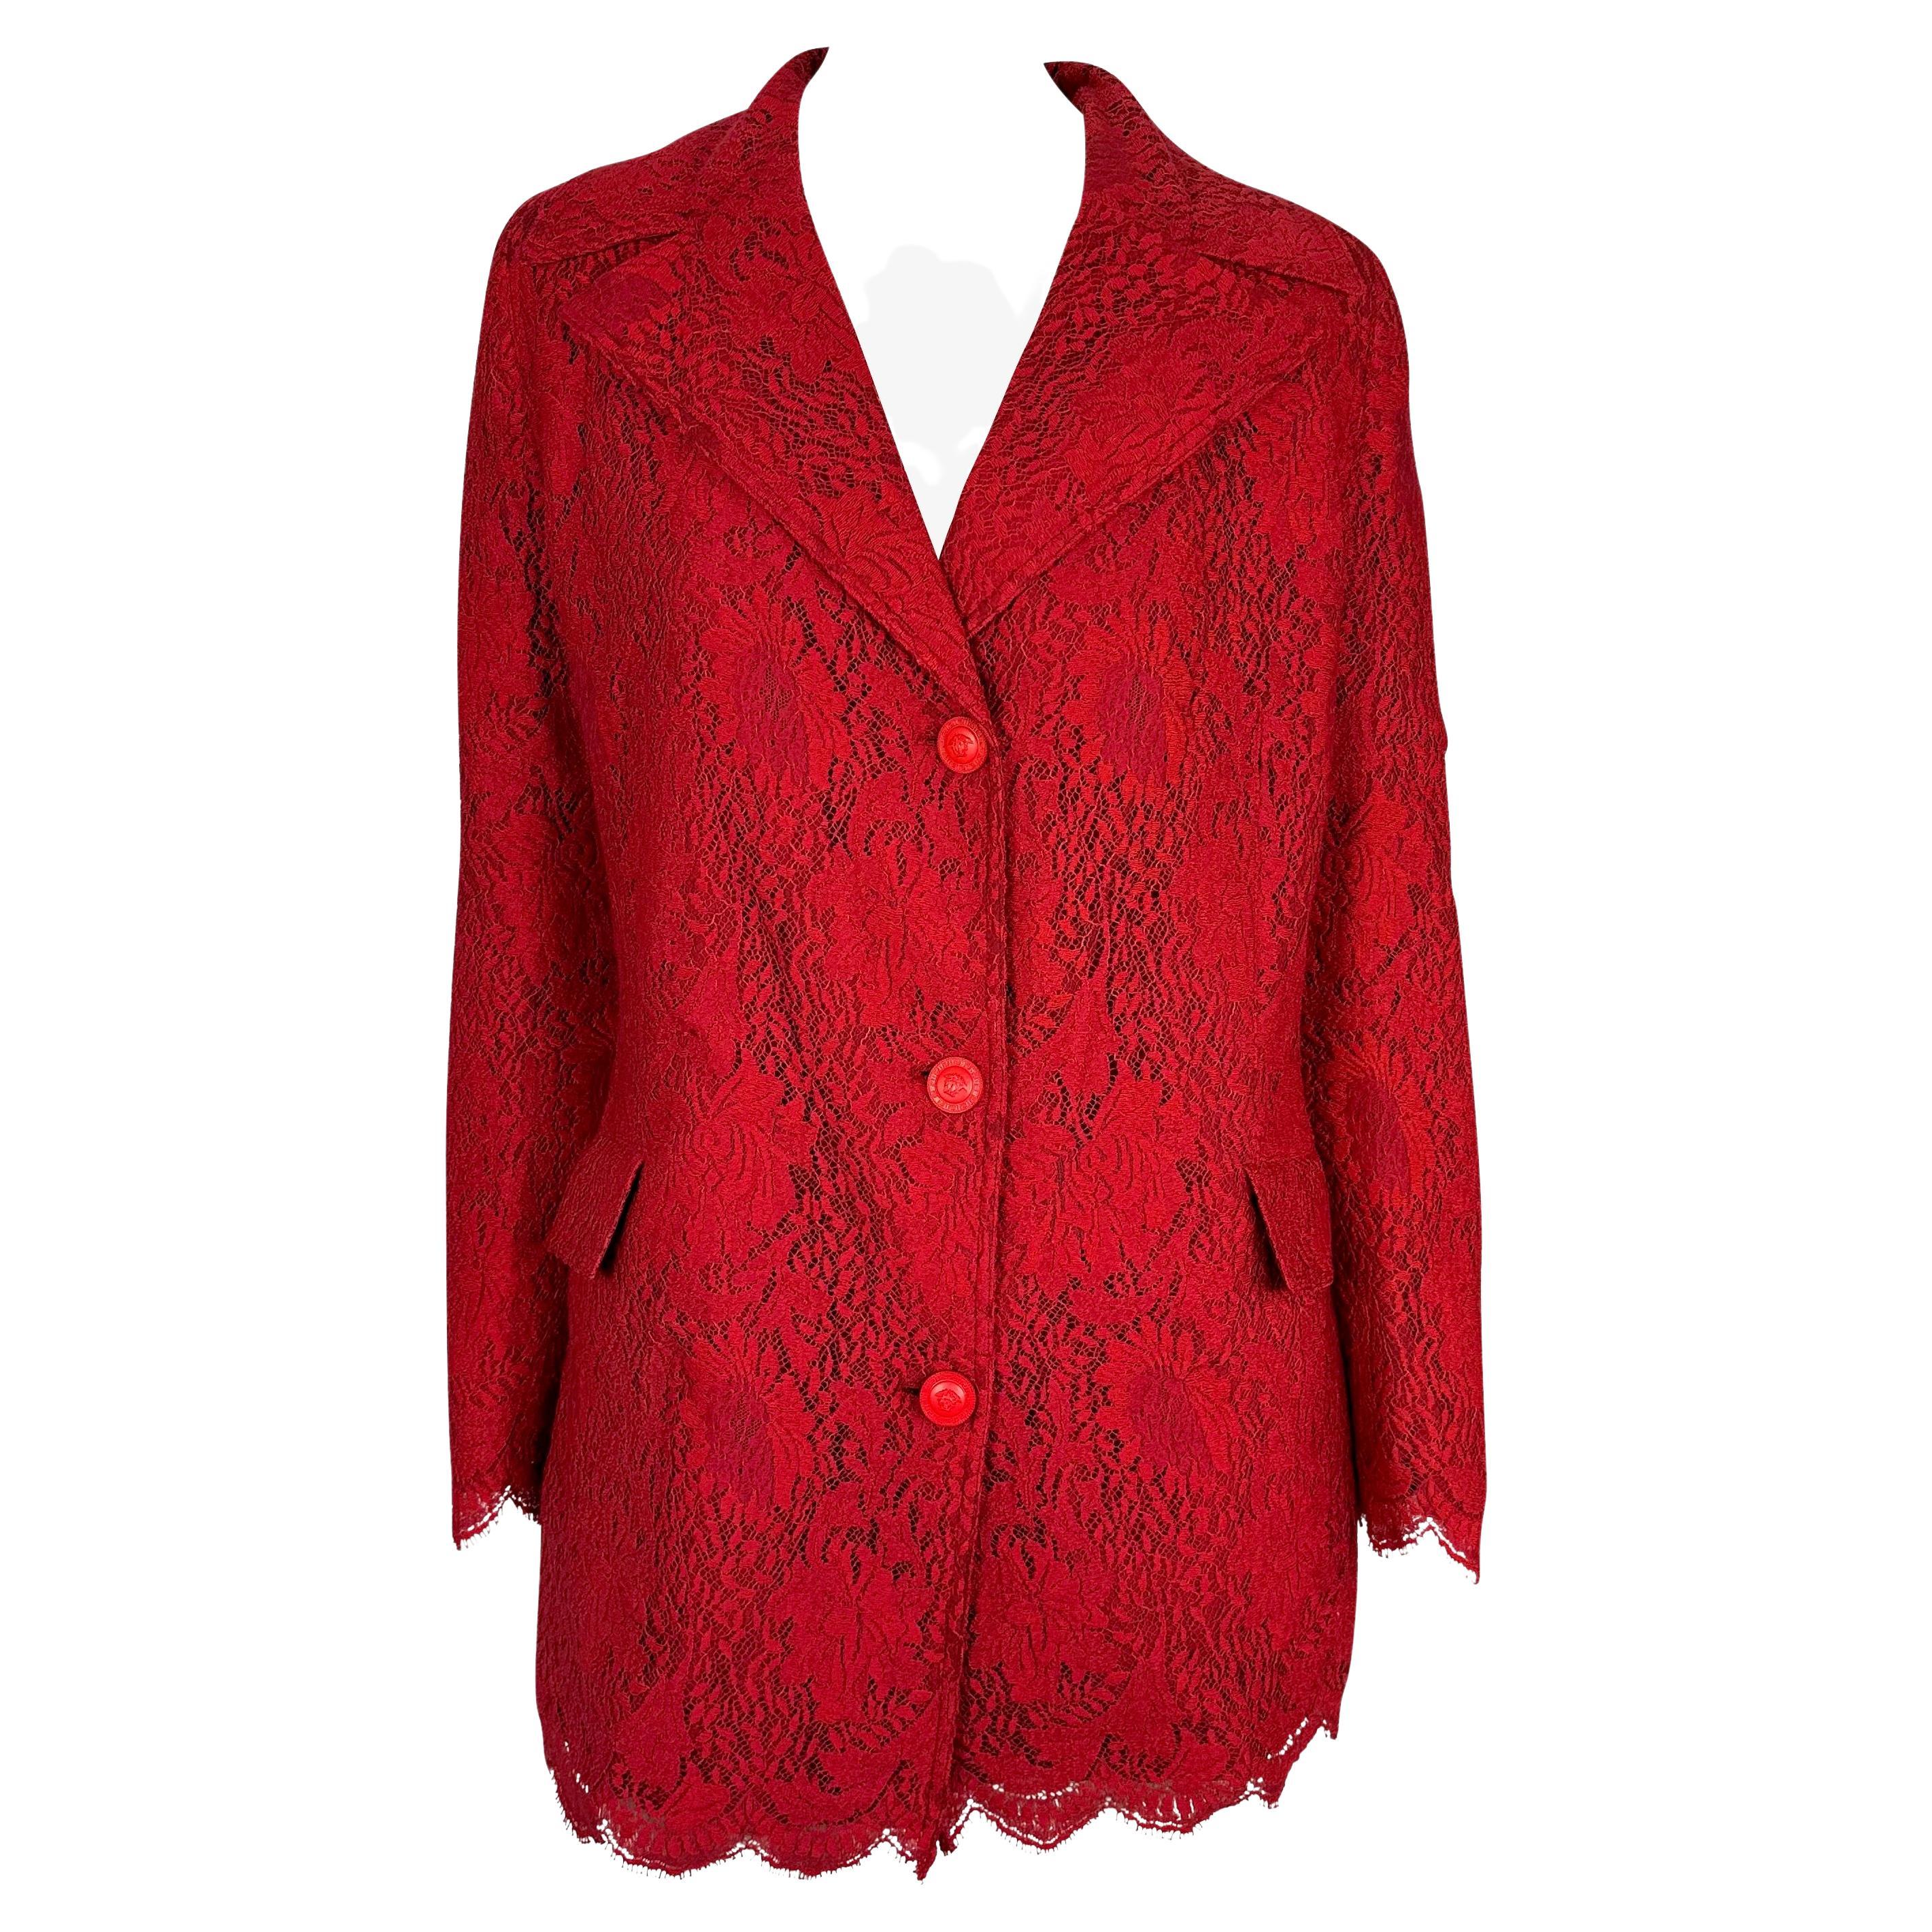 1996 Gianni Versace Red Lace Overlay Monochrome Medusa Coat